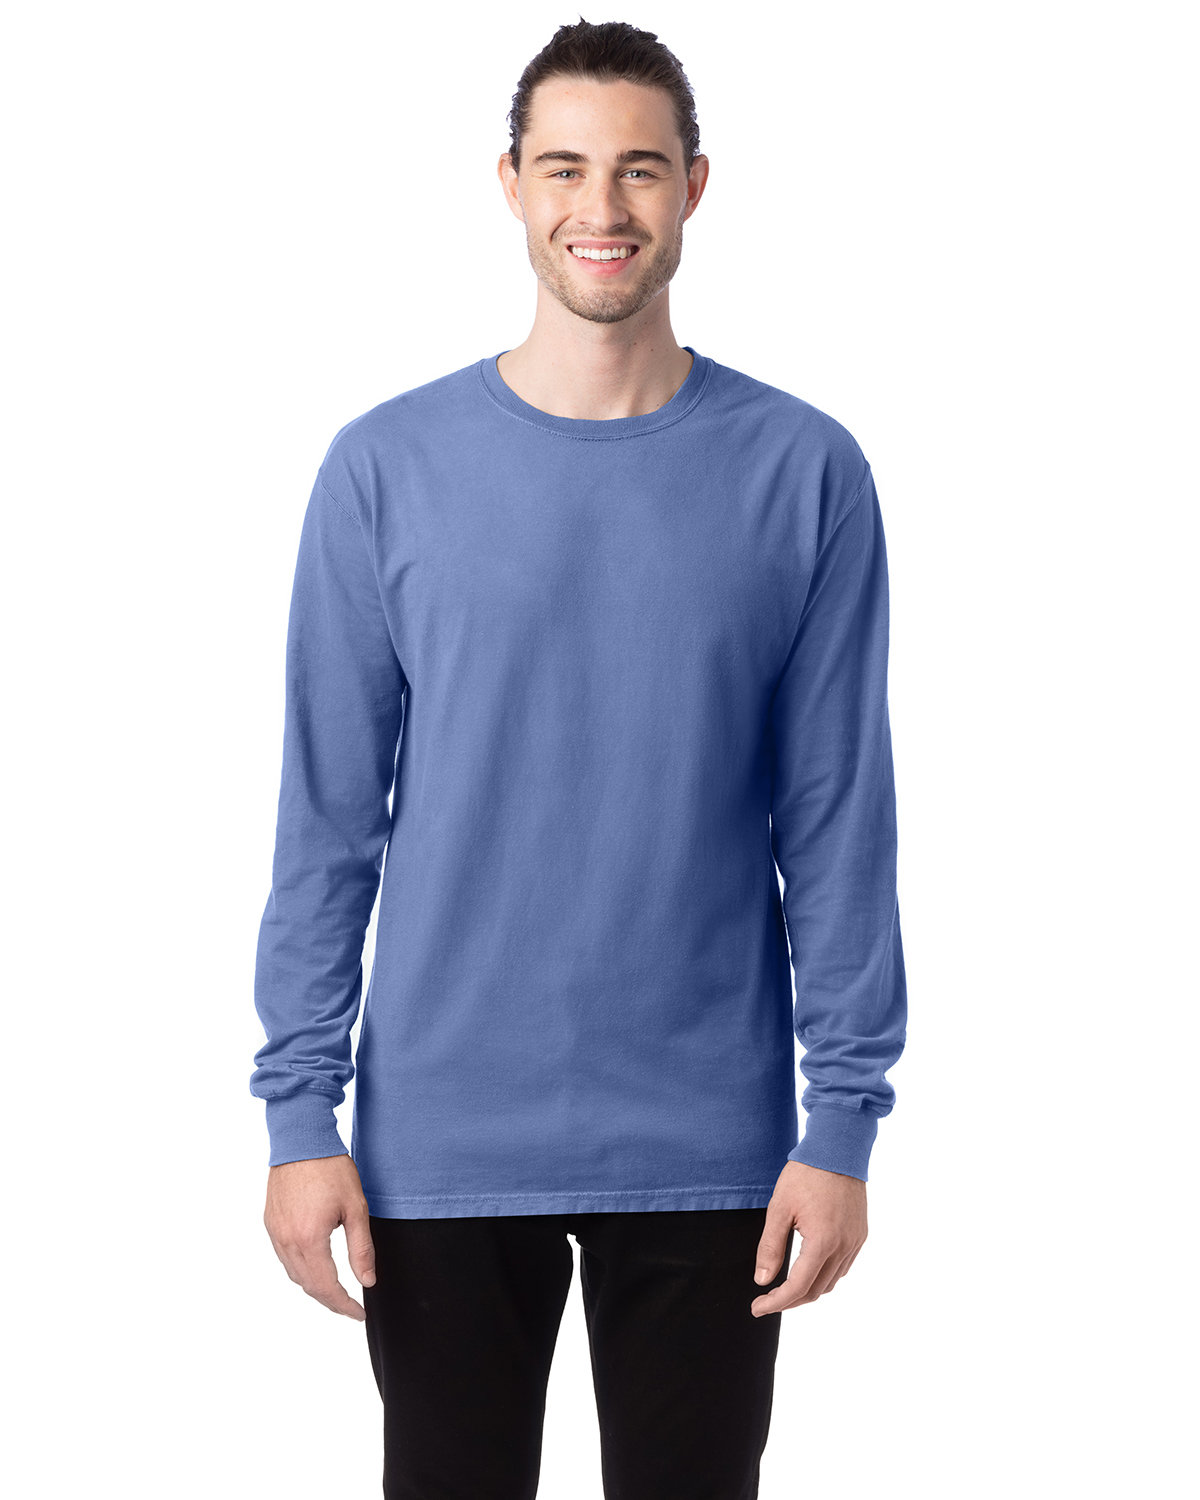 ComfortWash by Hanes GDH200 | Garment-Dyed Ringspun | ShirtSpace Long-Sleeve Unisex 5.5 Cotton T-Shirt oz., 100